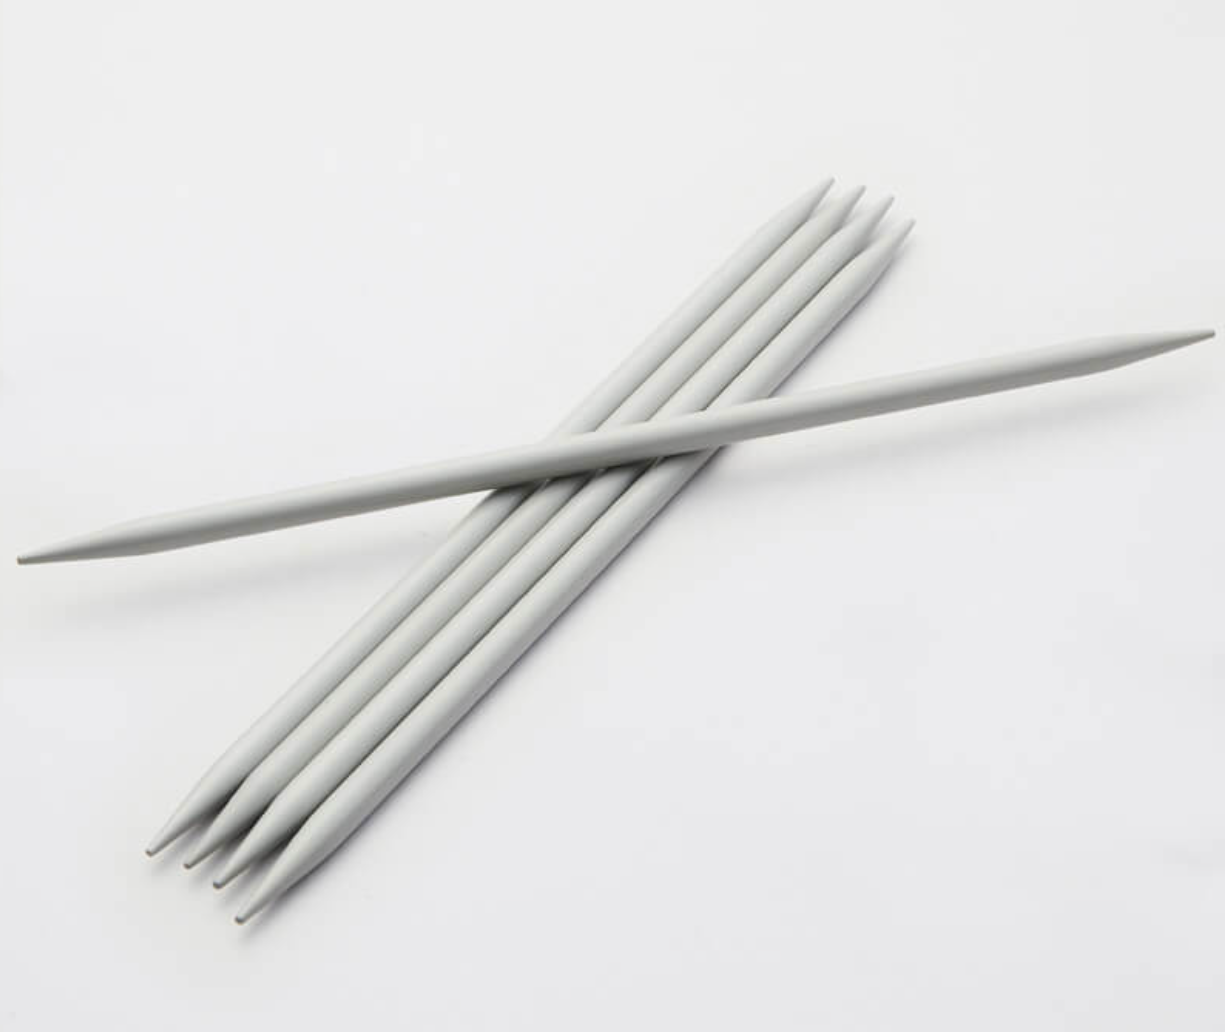 Basix Aluminium Double Pointed Needles